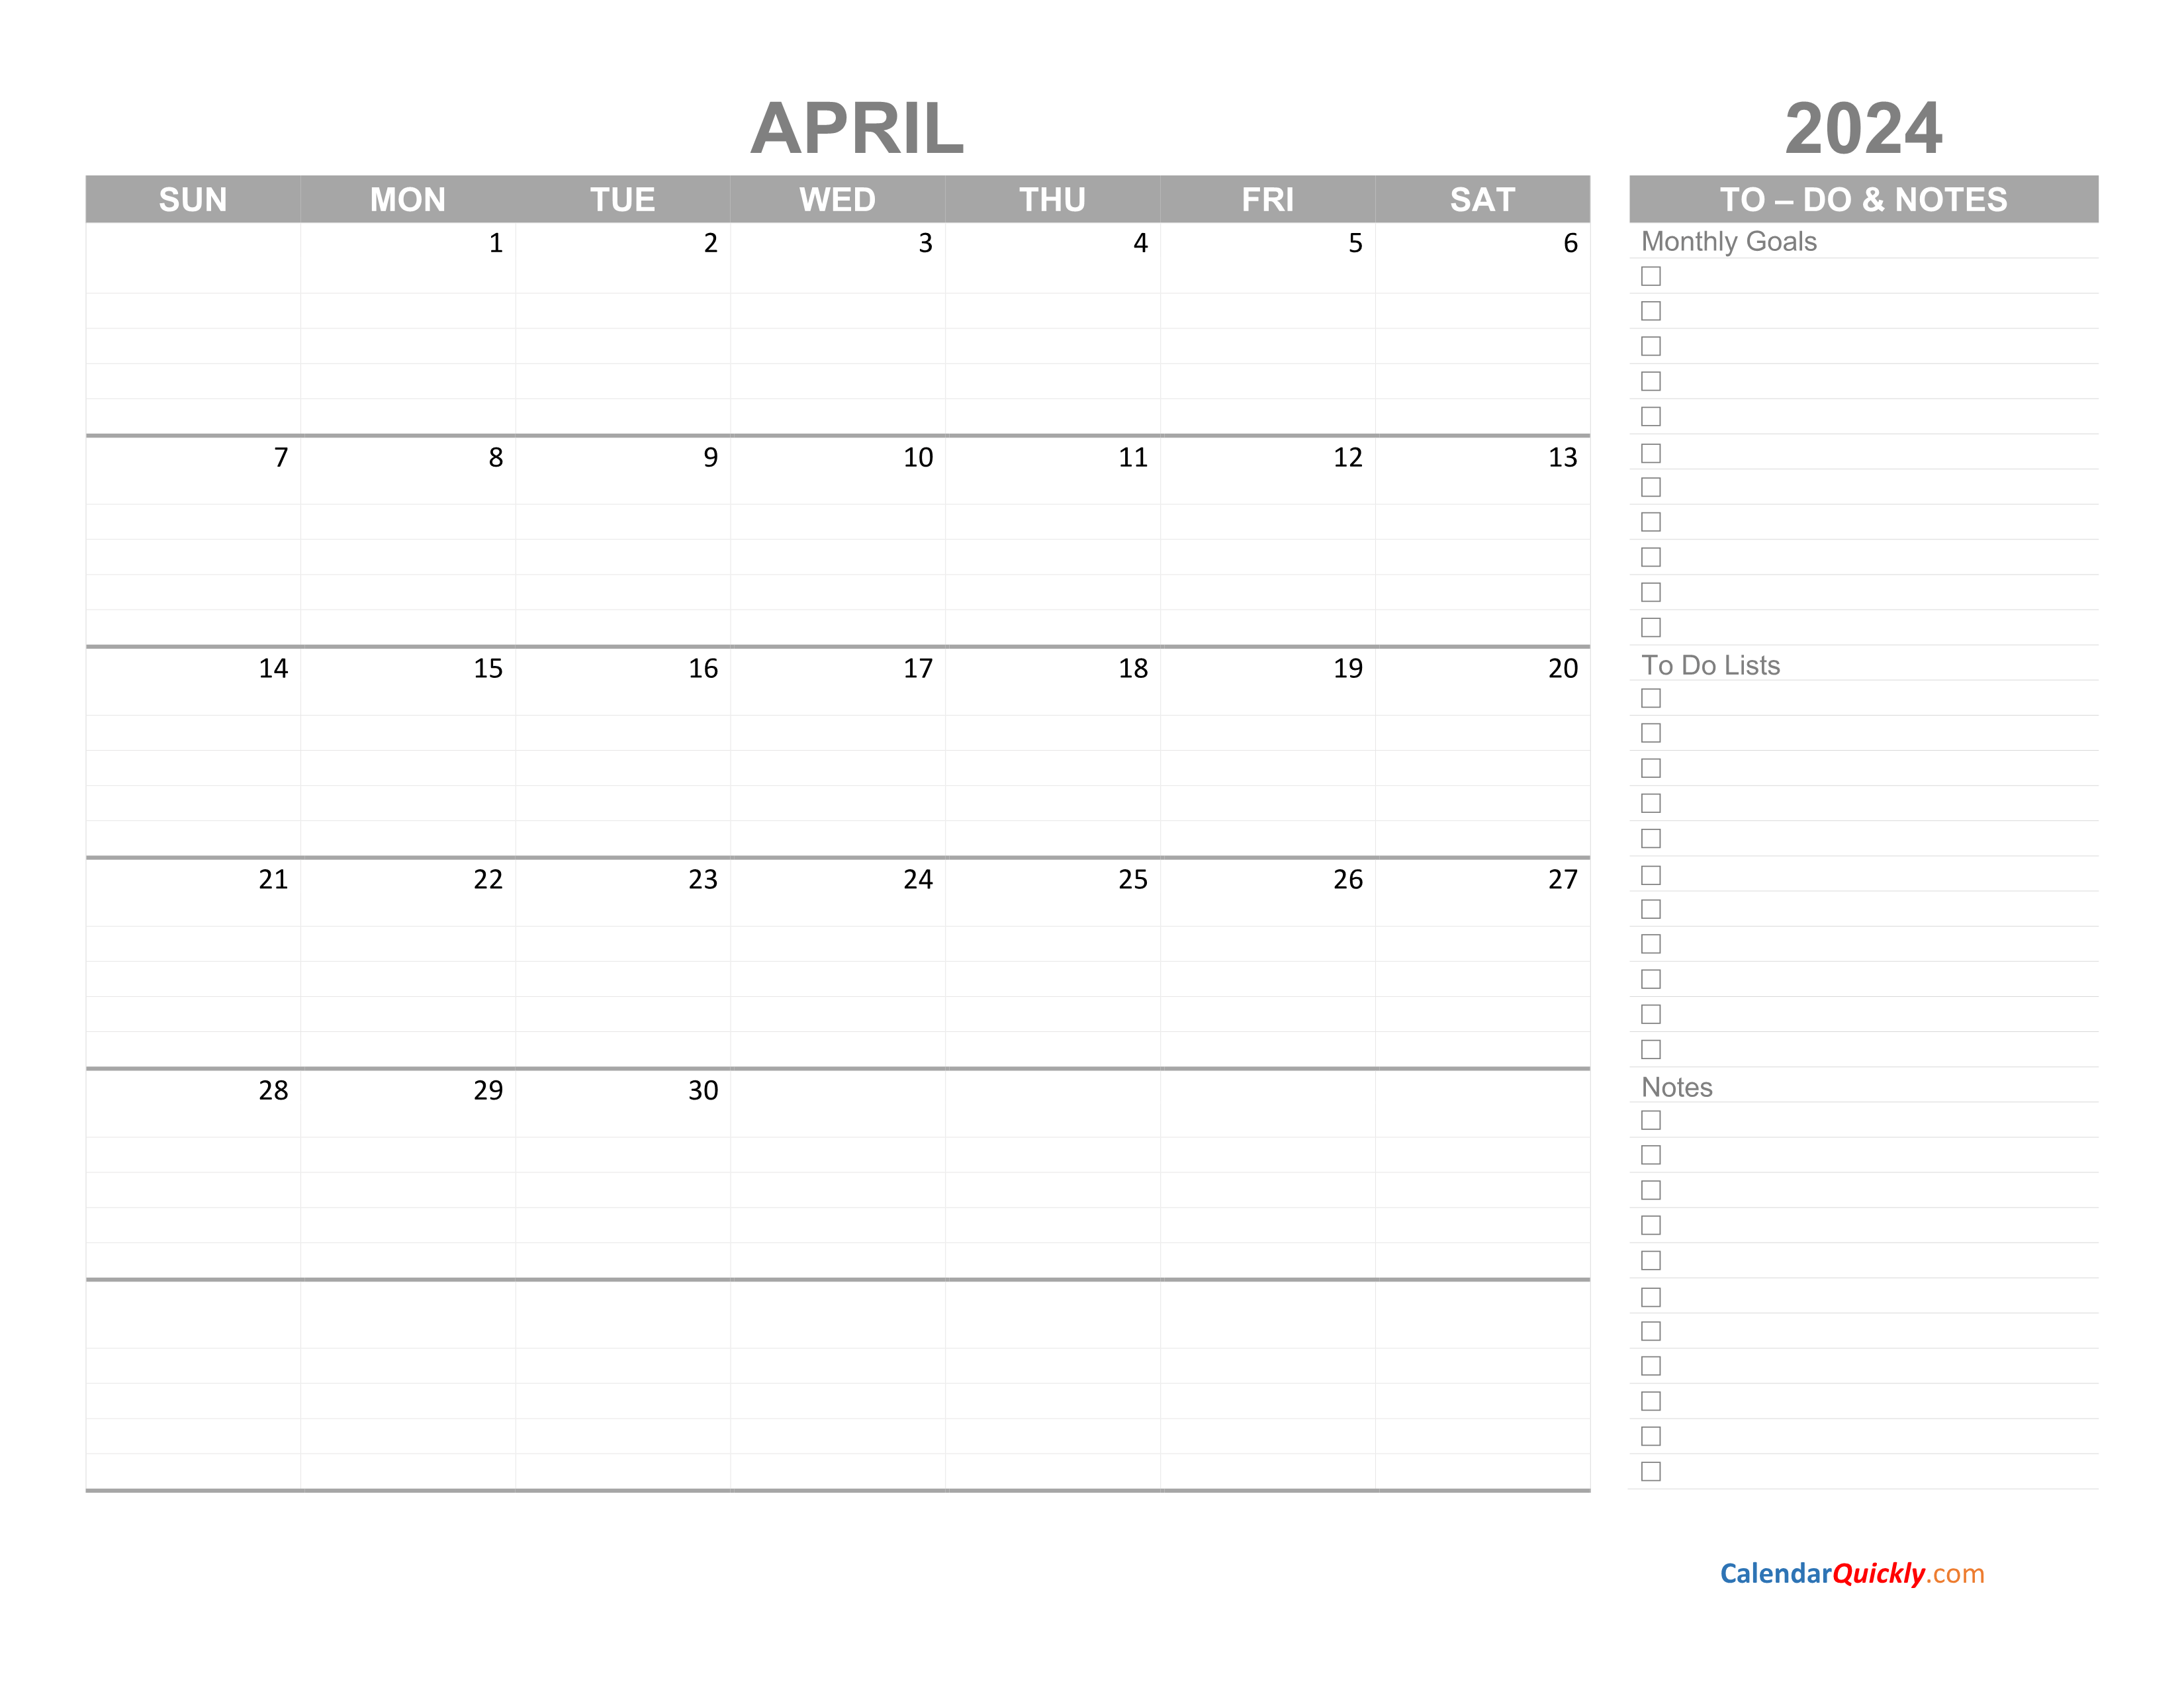 April 2024 Calendar with ToDo List Calendar Quickly